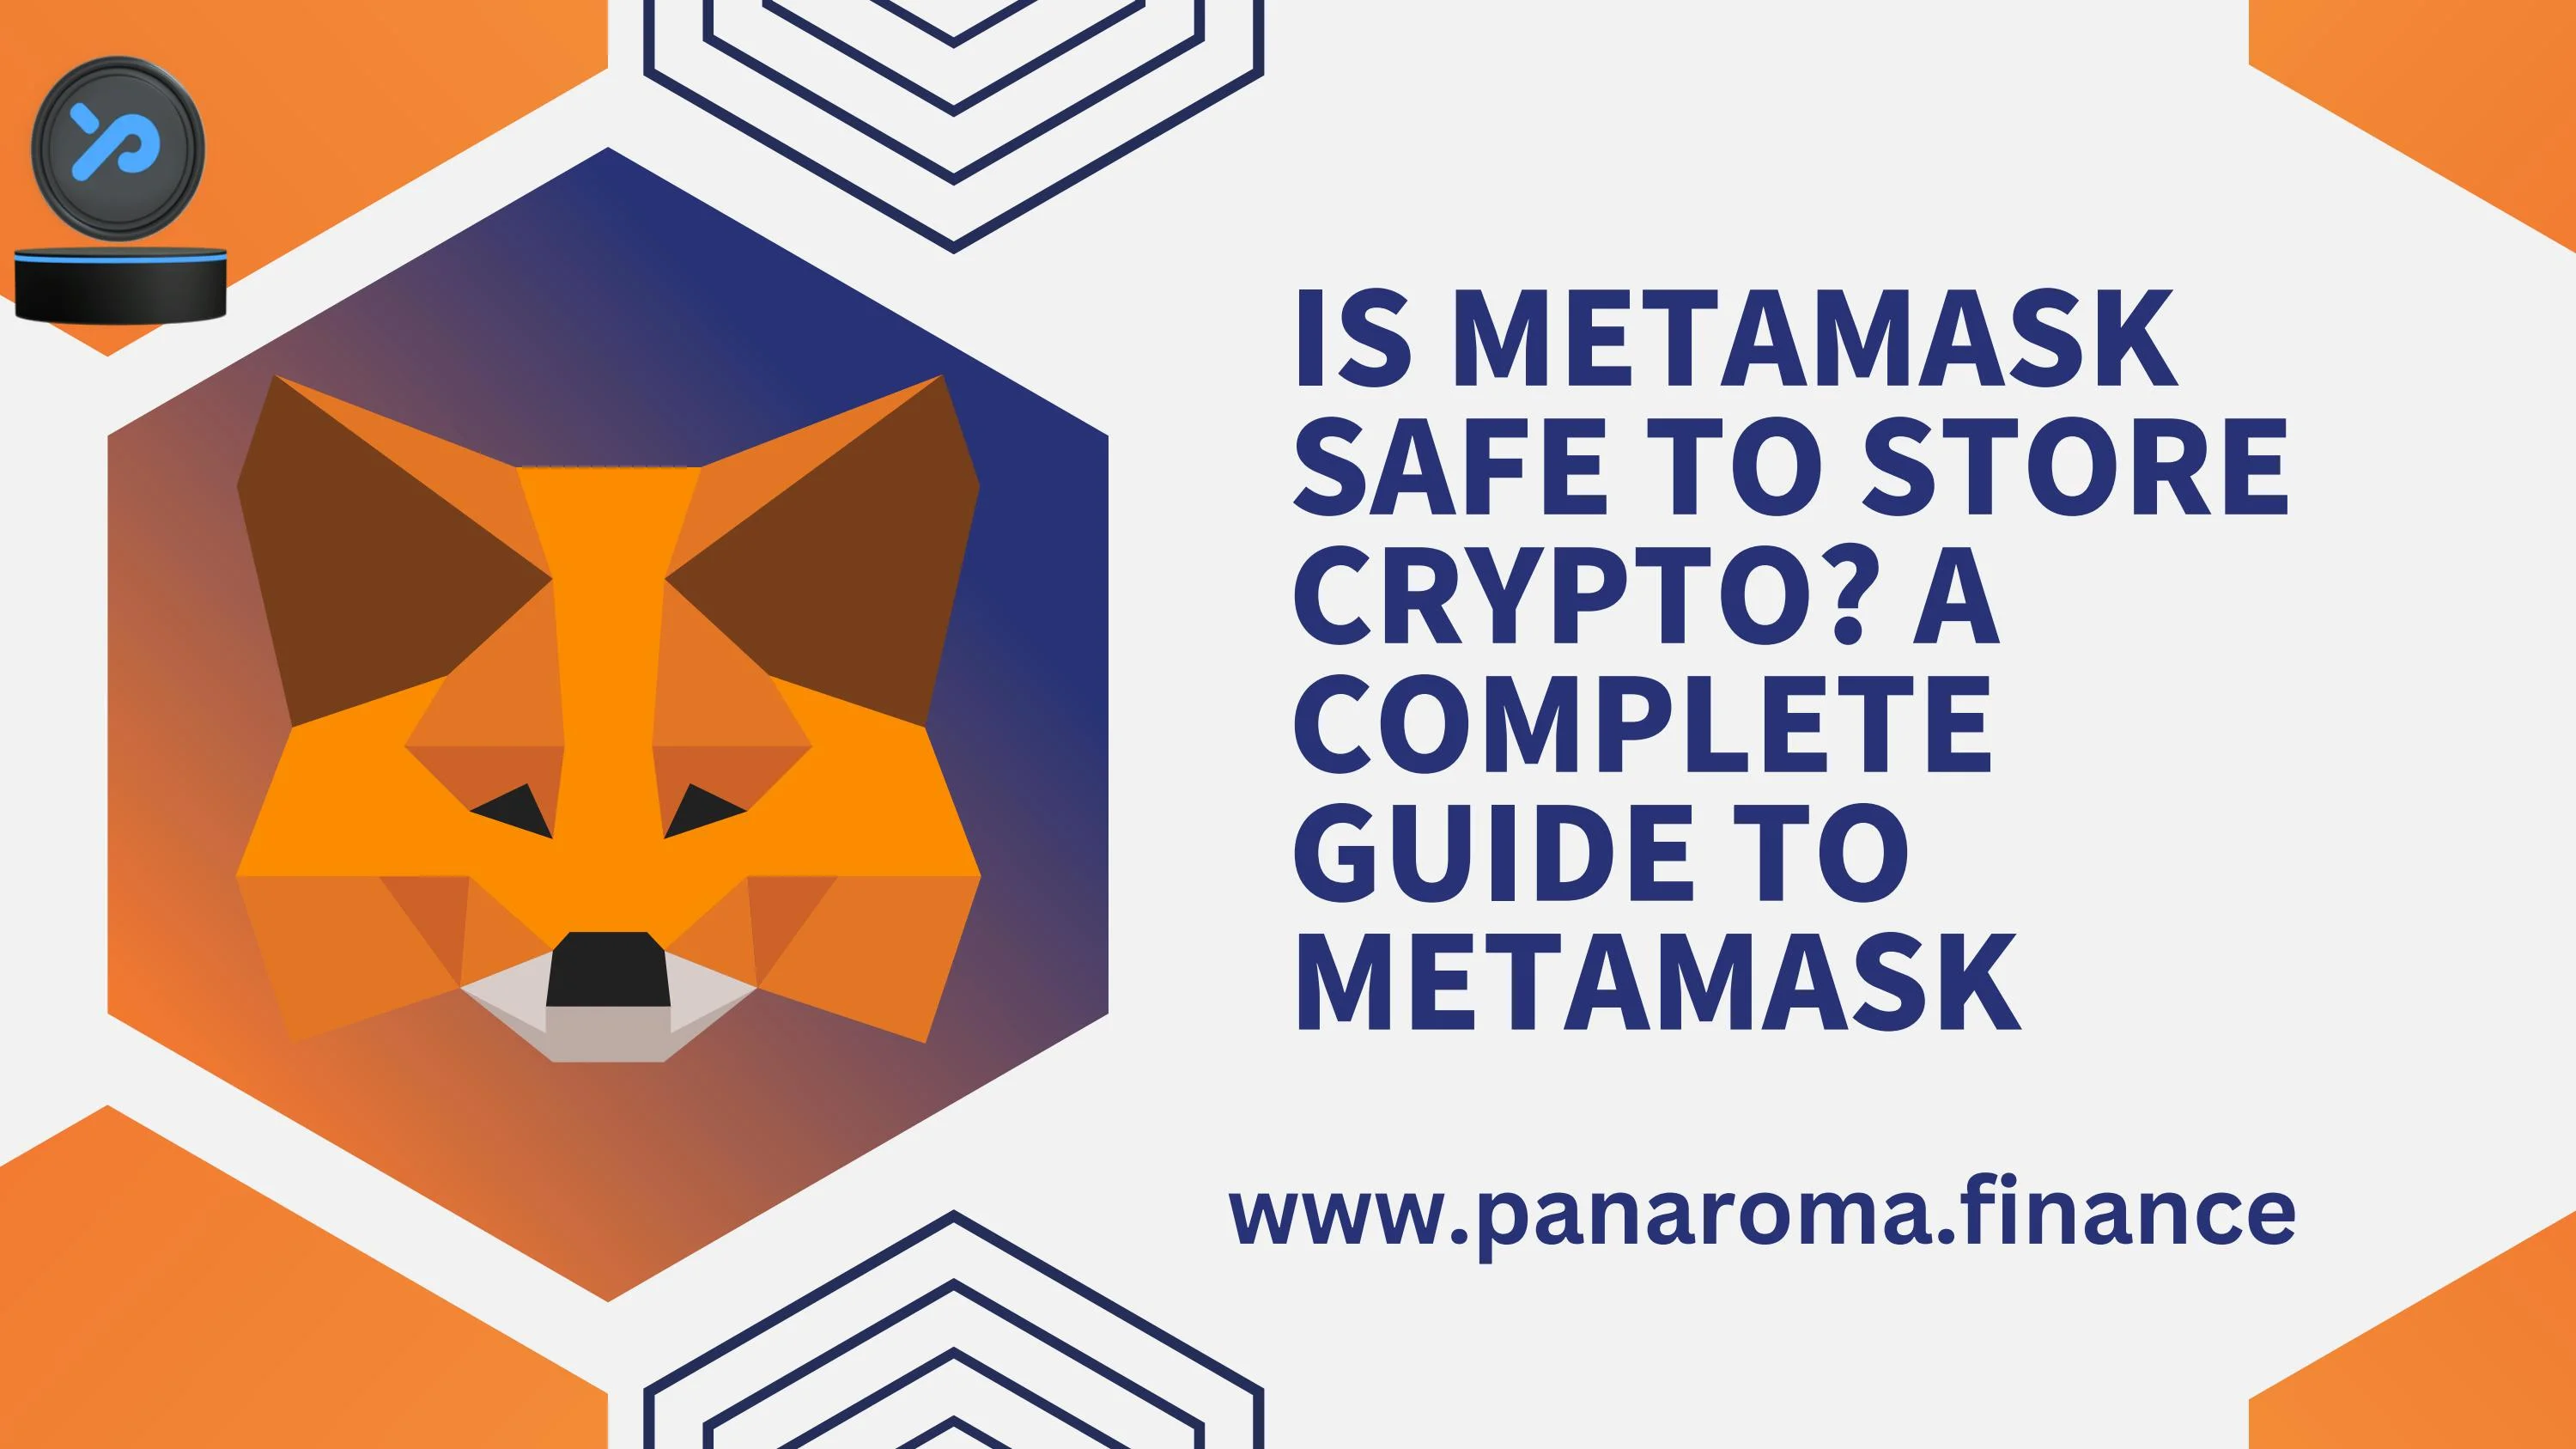 What is MetaMask?